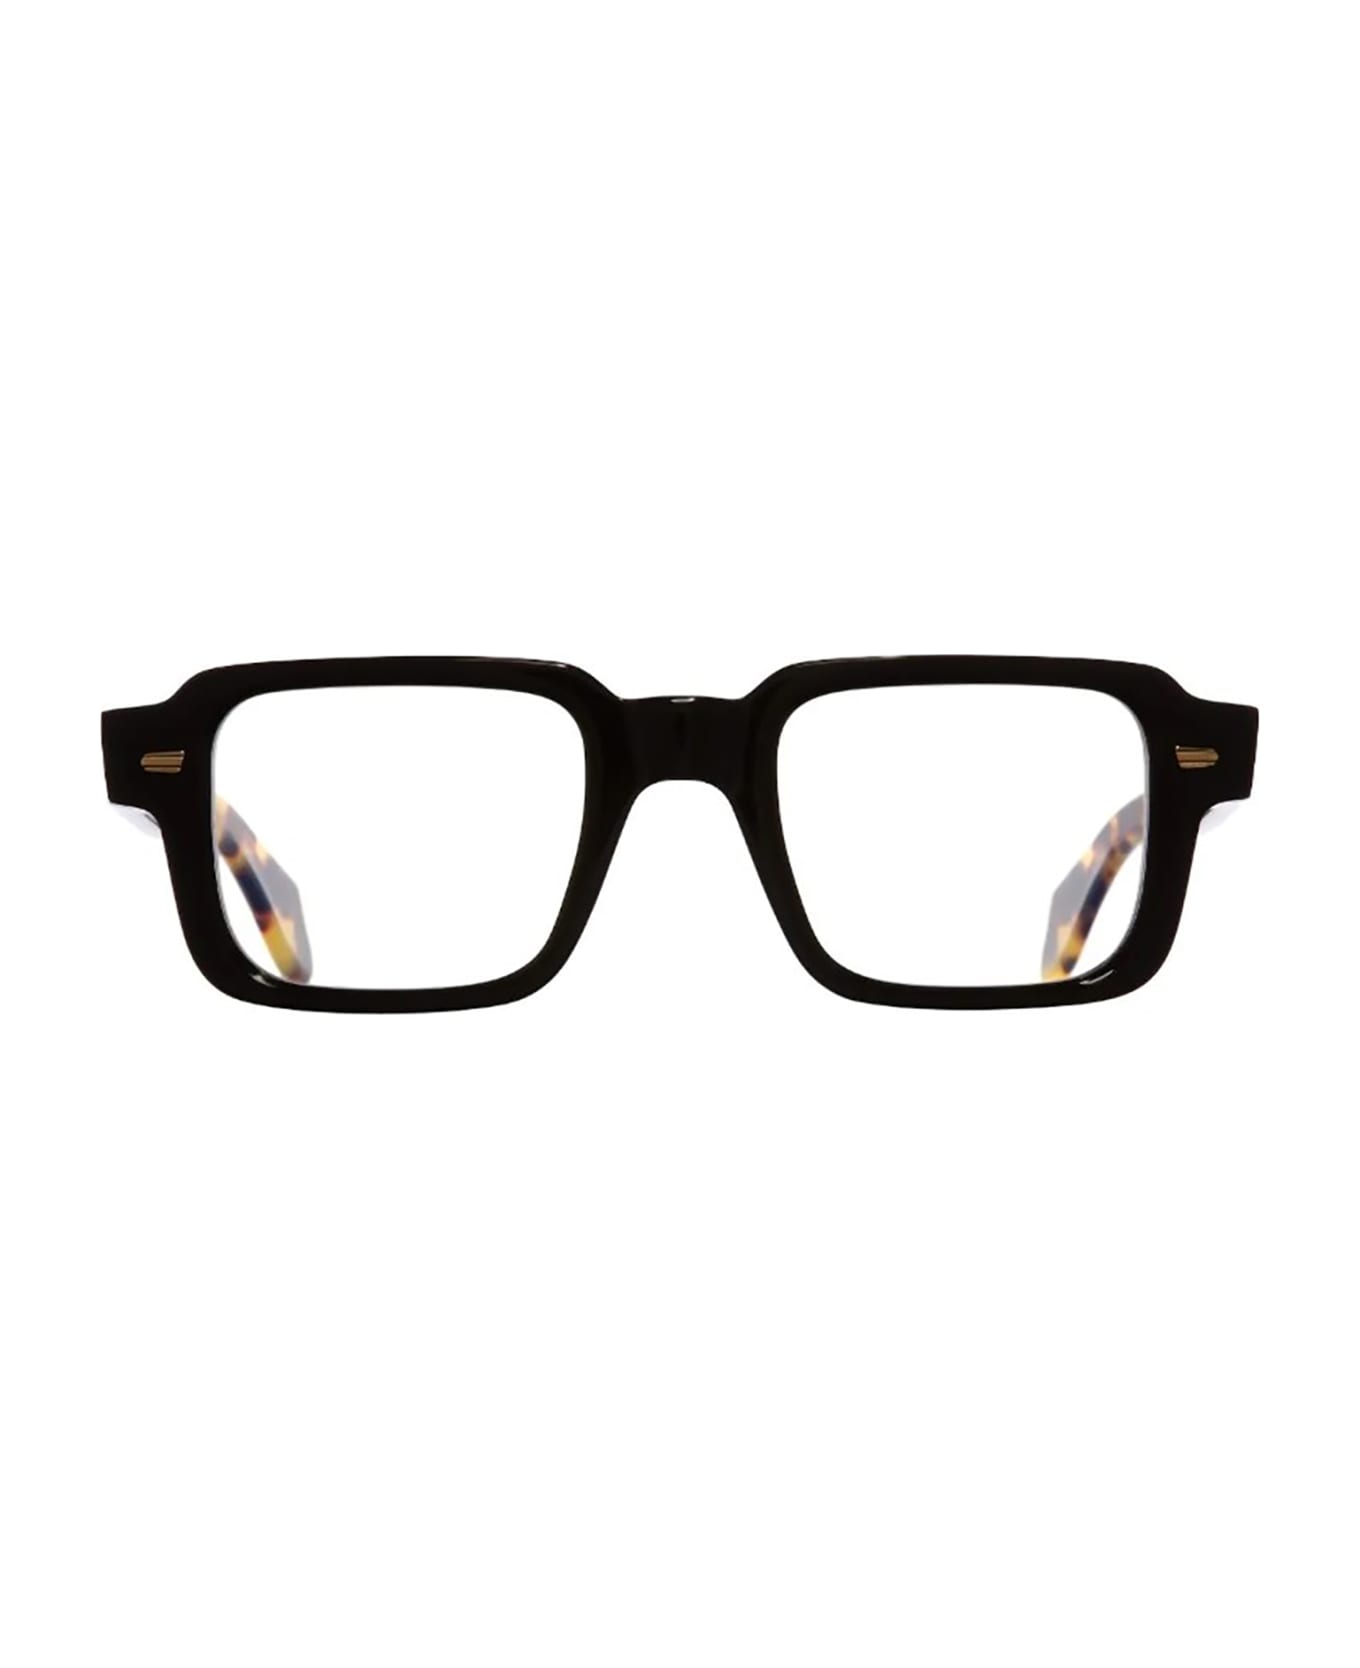 Cutler and Gross 1393 Sunglasses - Black On Camu(vista)